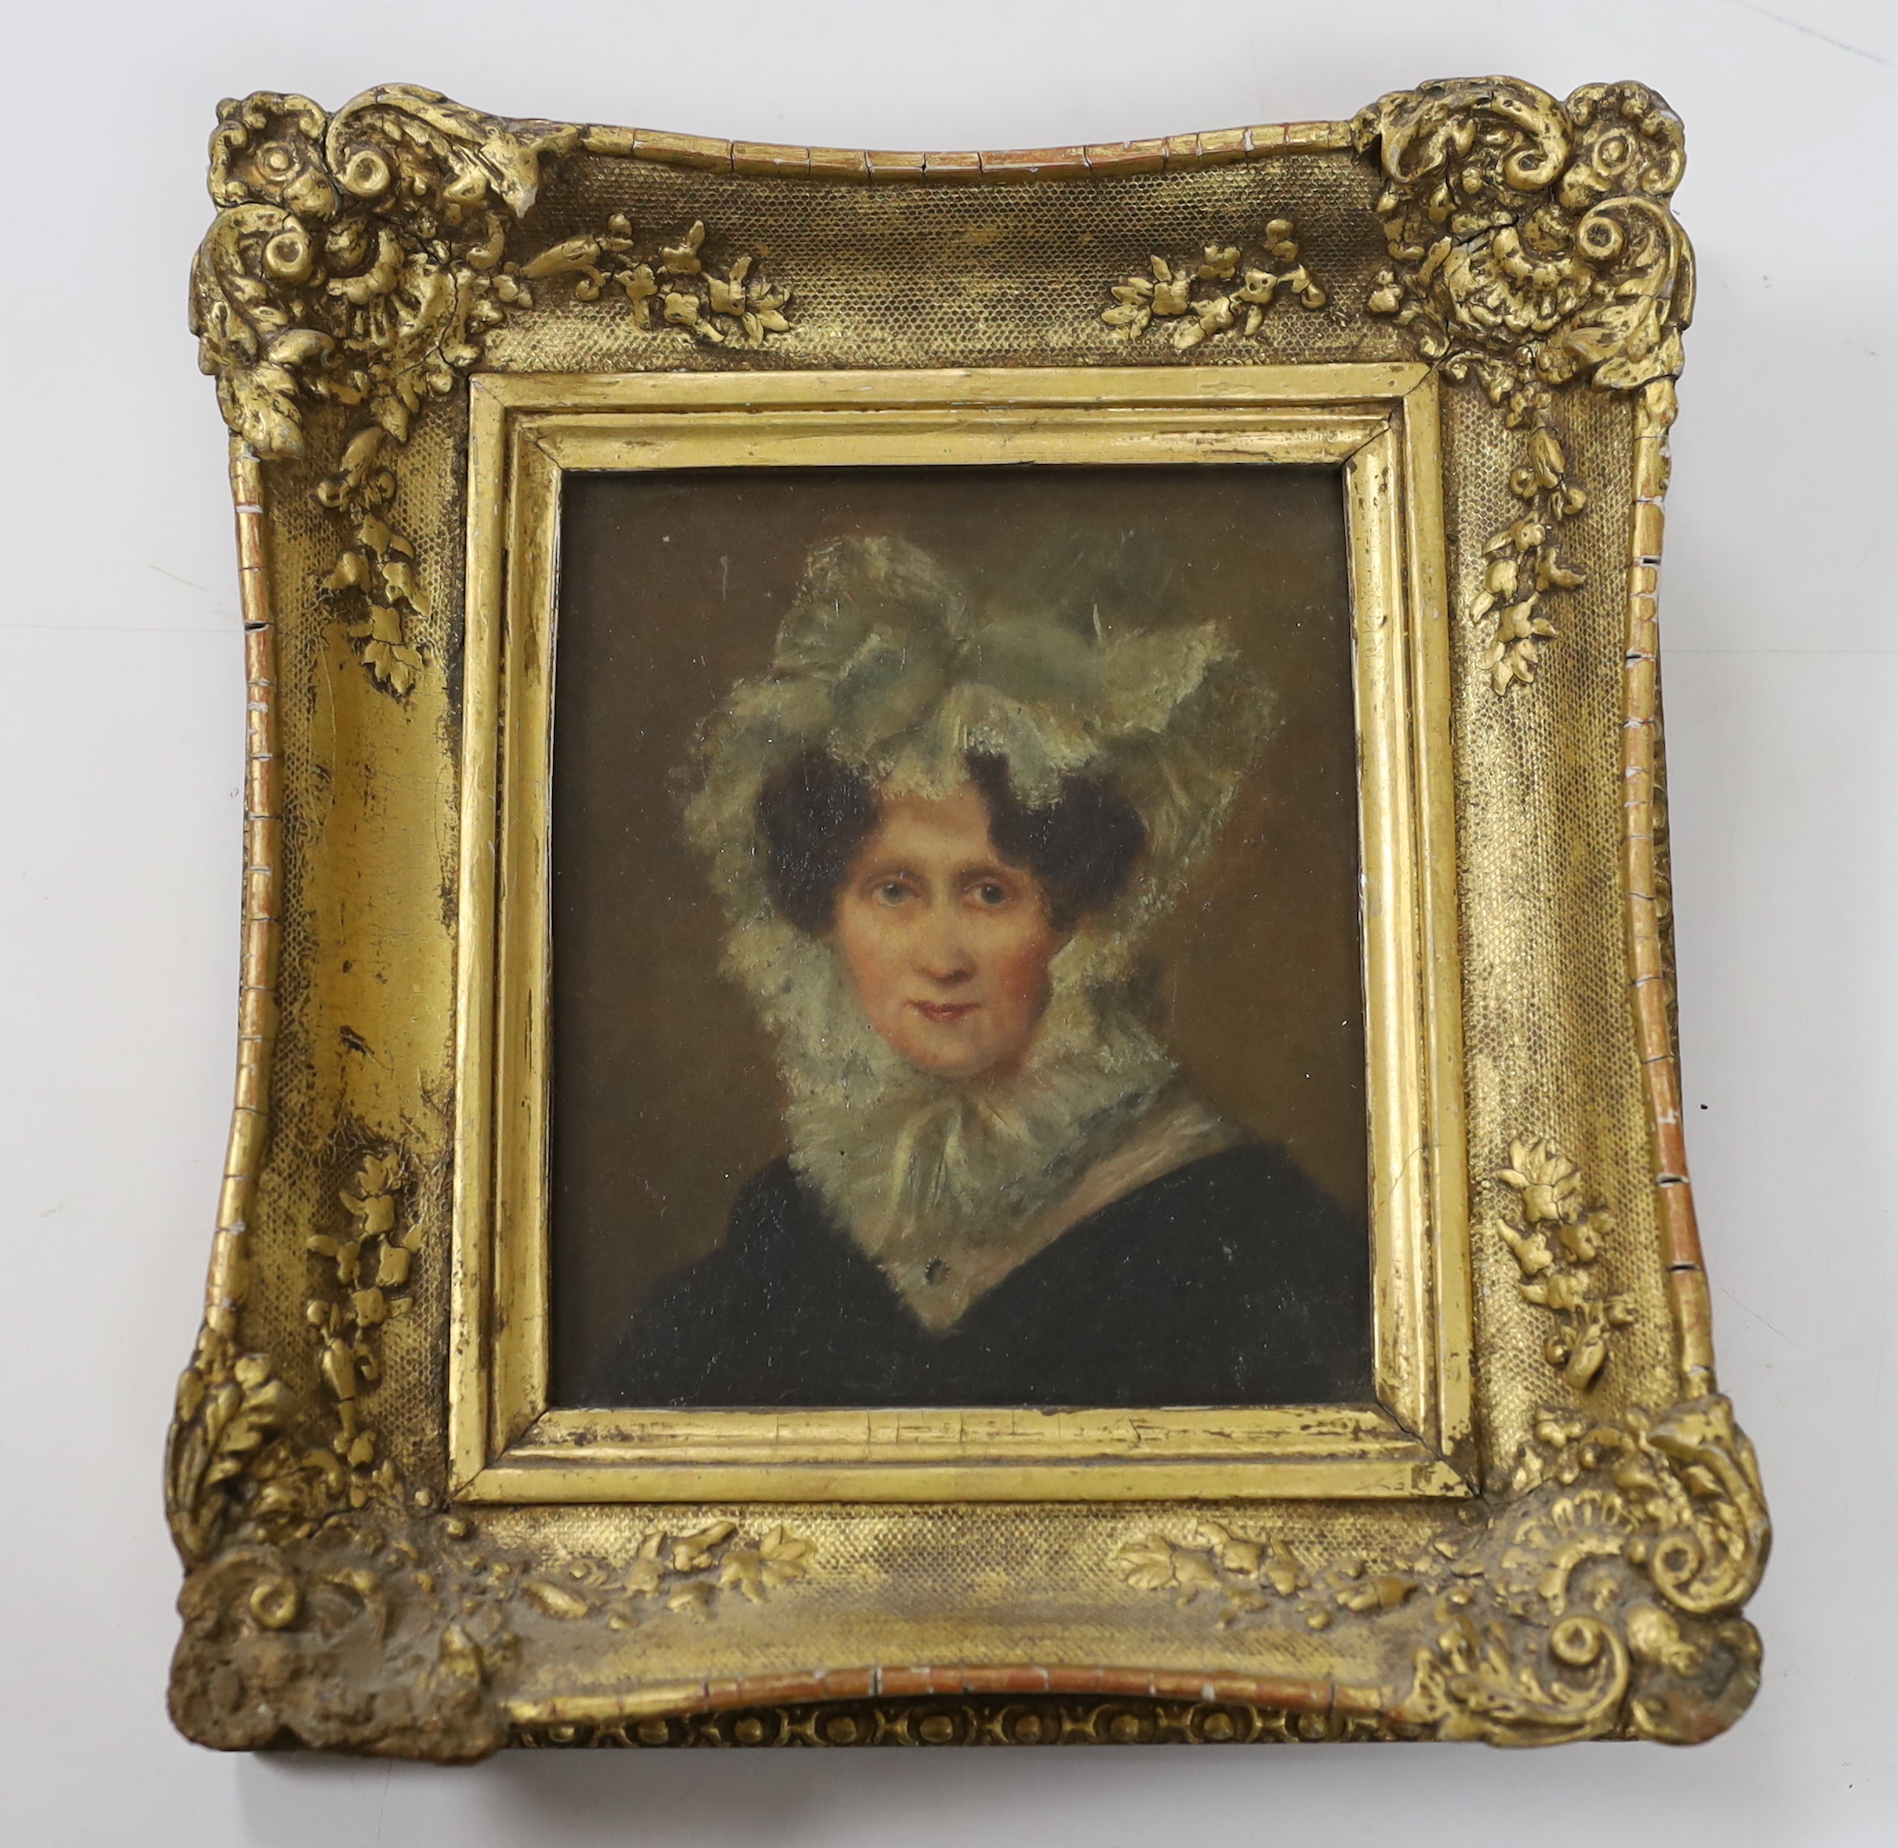 19th century English School, oil on canvas, Portrait of a lady wearing a bonnet, 16 x 13cm, ornate gilt frame